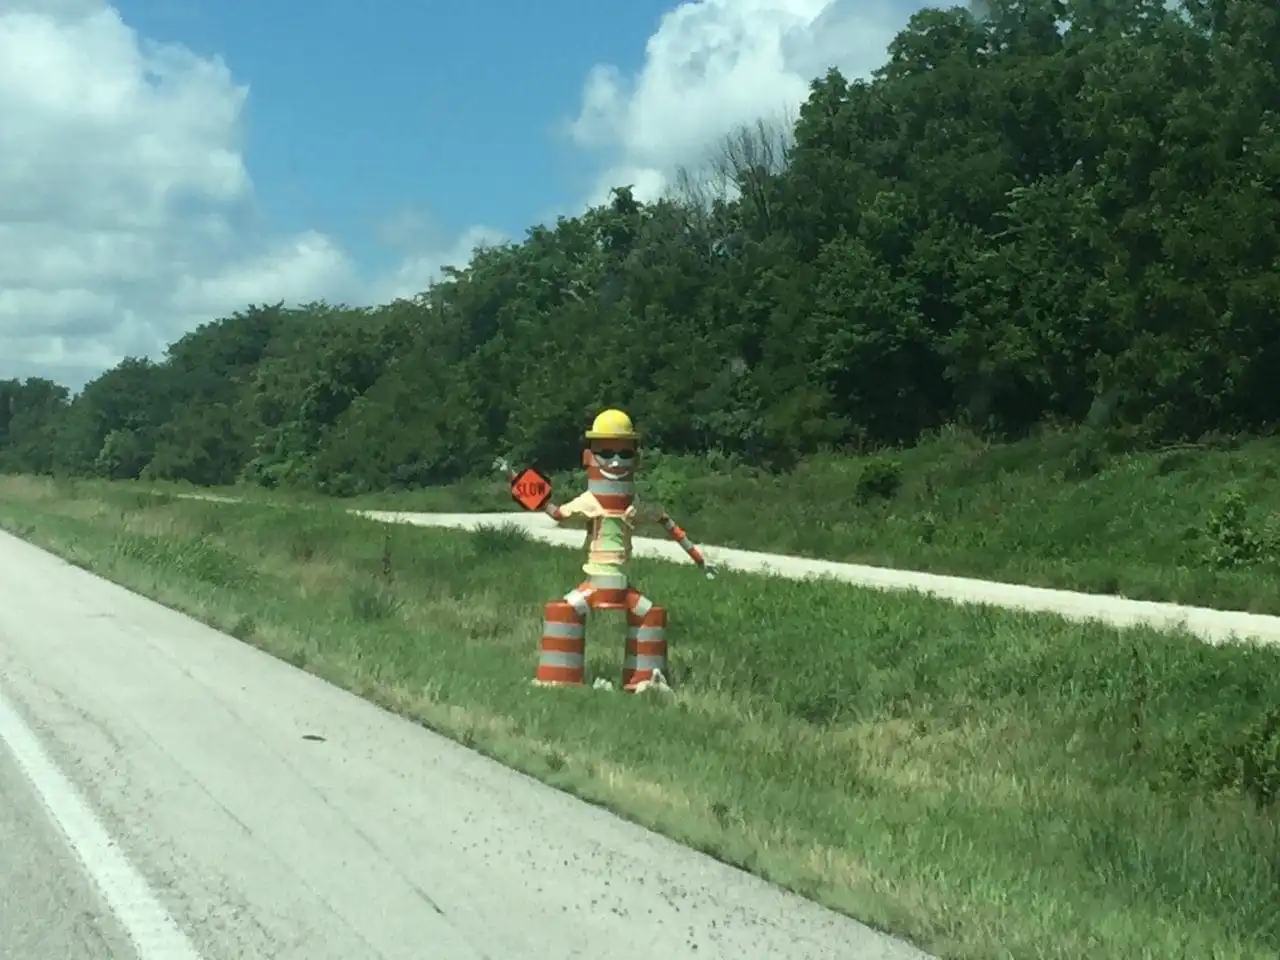 A construction worker sculpture made from orange barrels